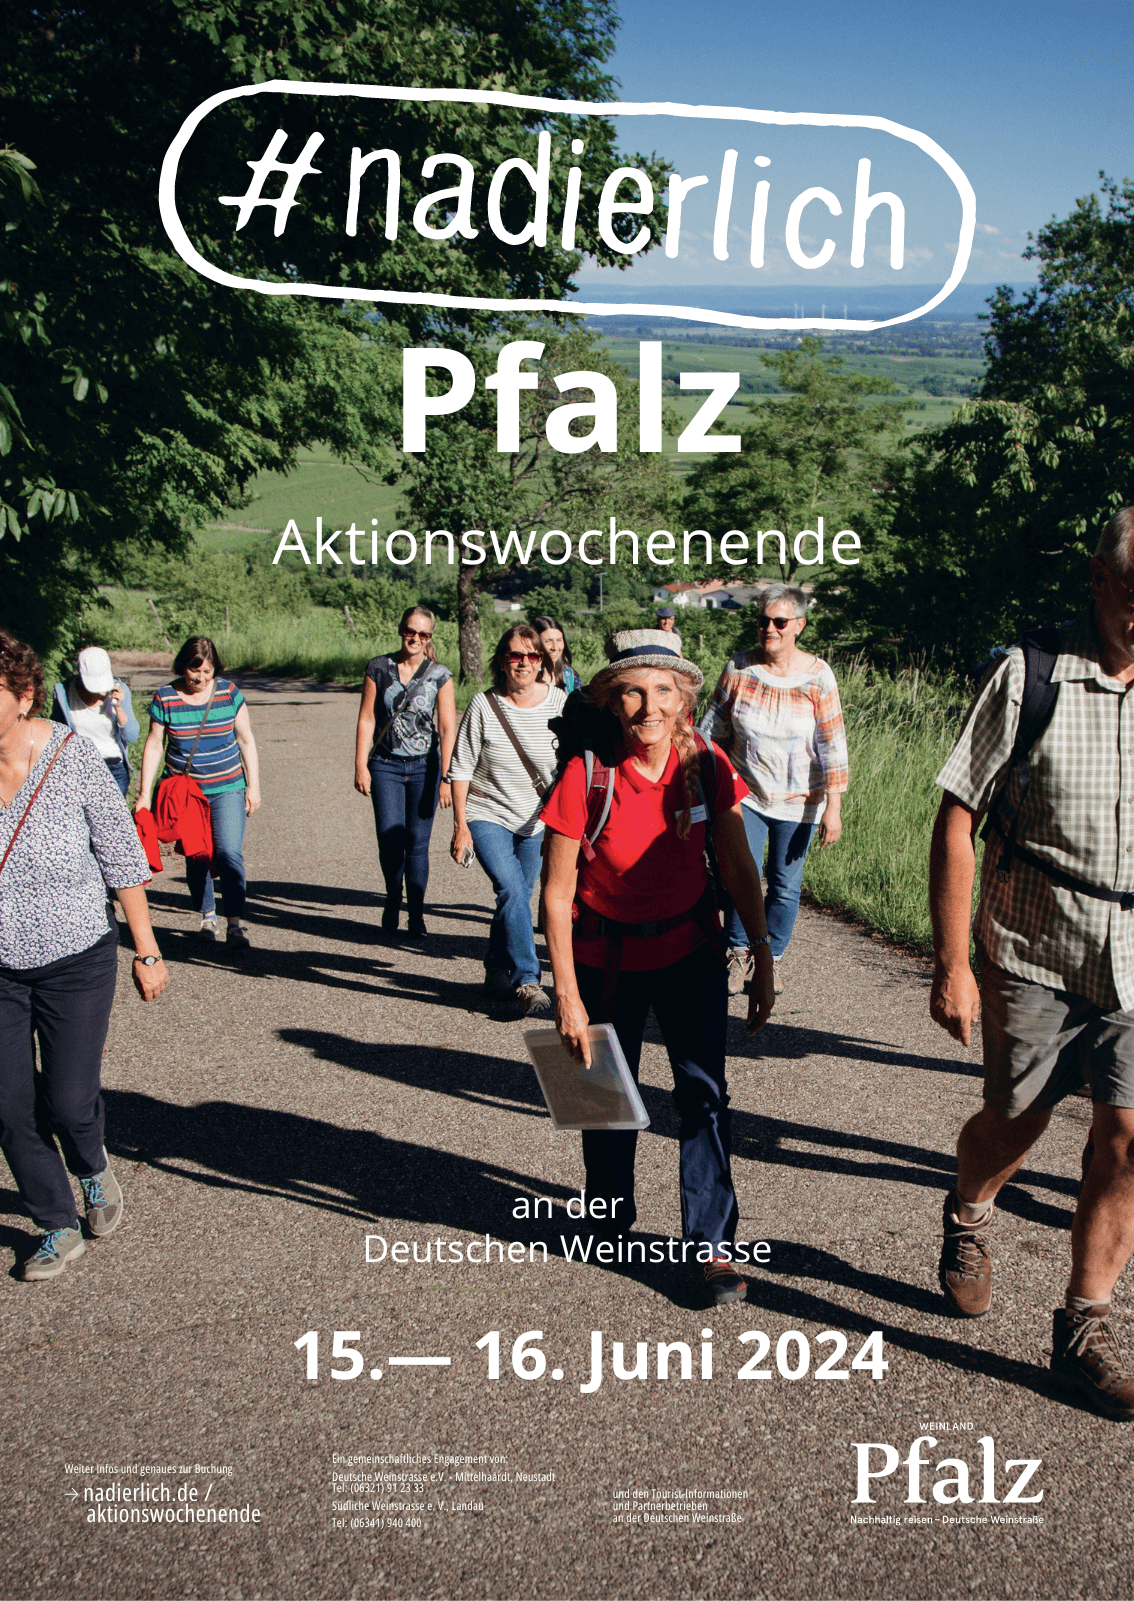 #nadierlich Pfalz - Aktionswochenende